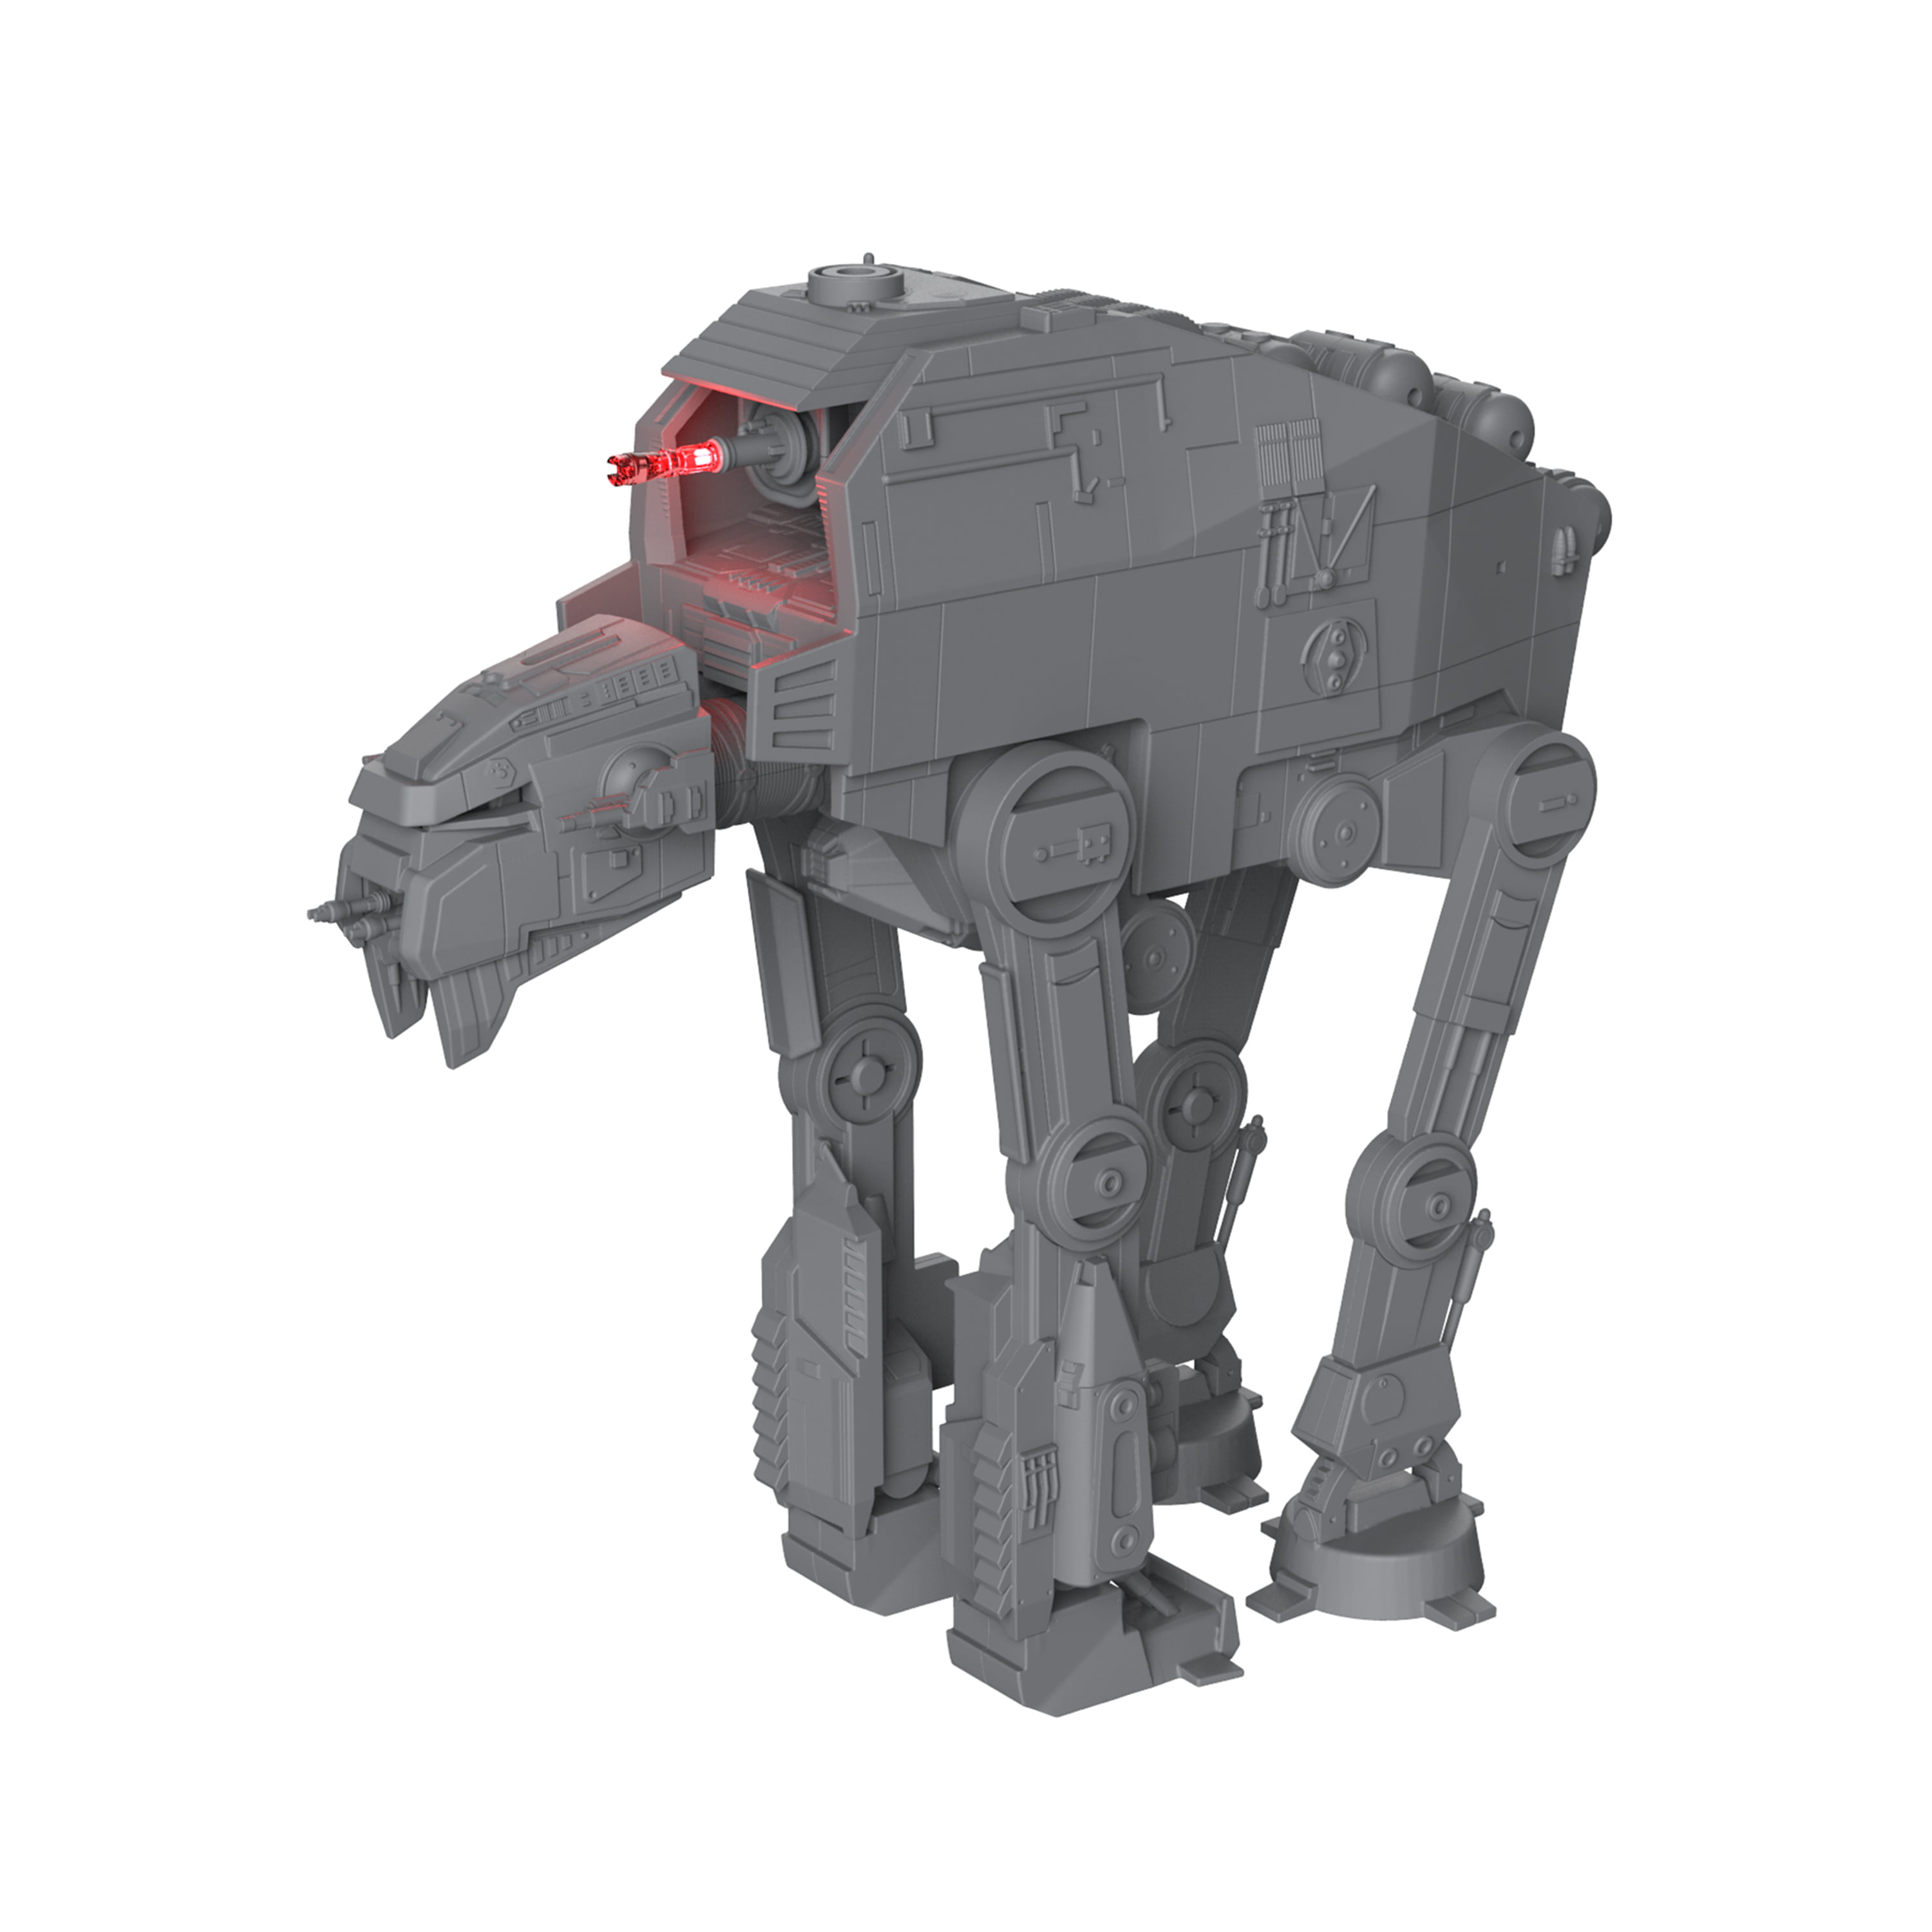 Metal Earth Star Wars AT-M6 ASSAULT Walker 3D Laser Cut DIY Model Building Kit 